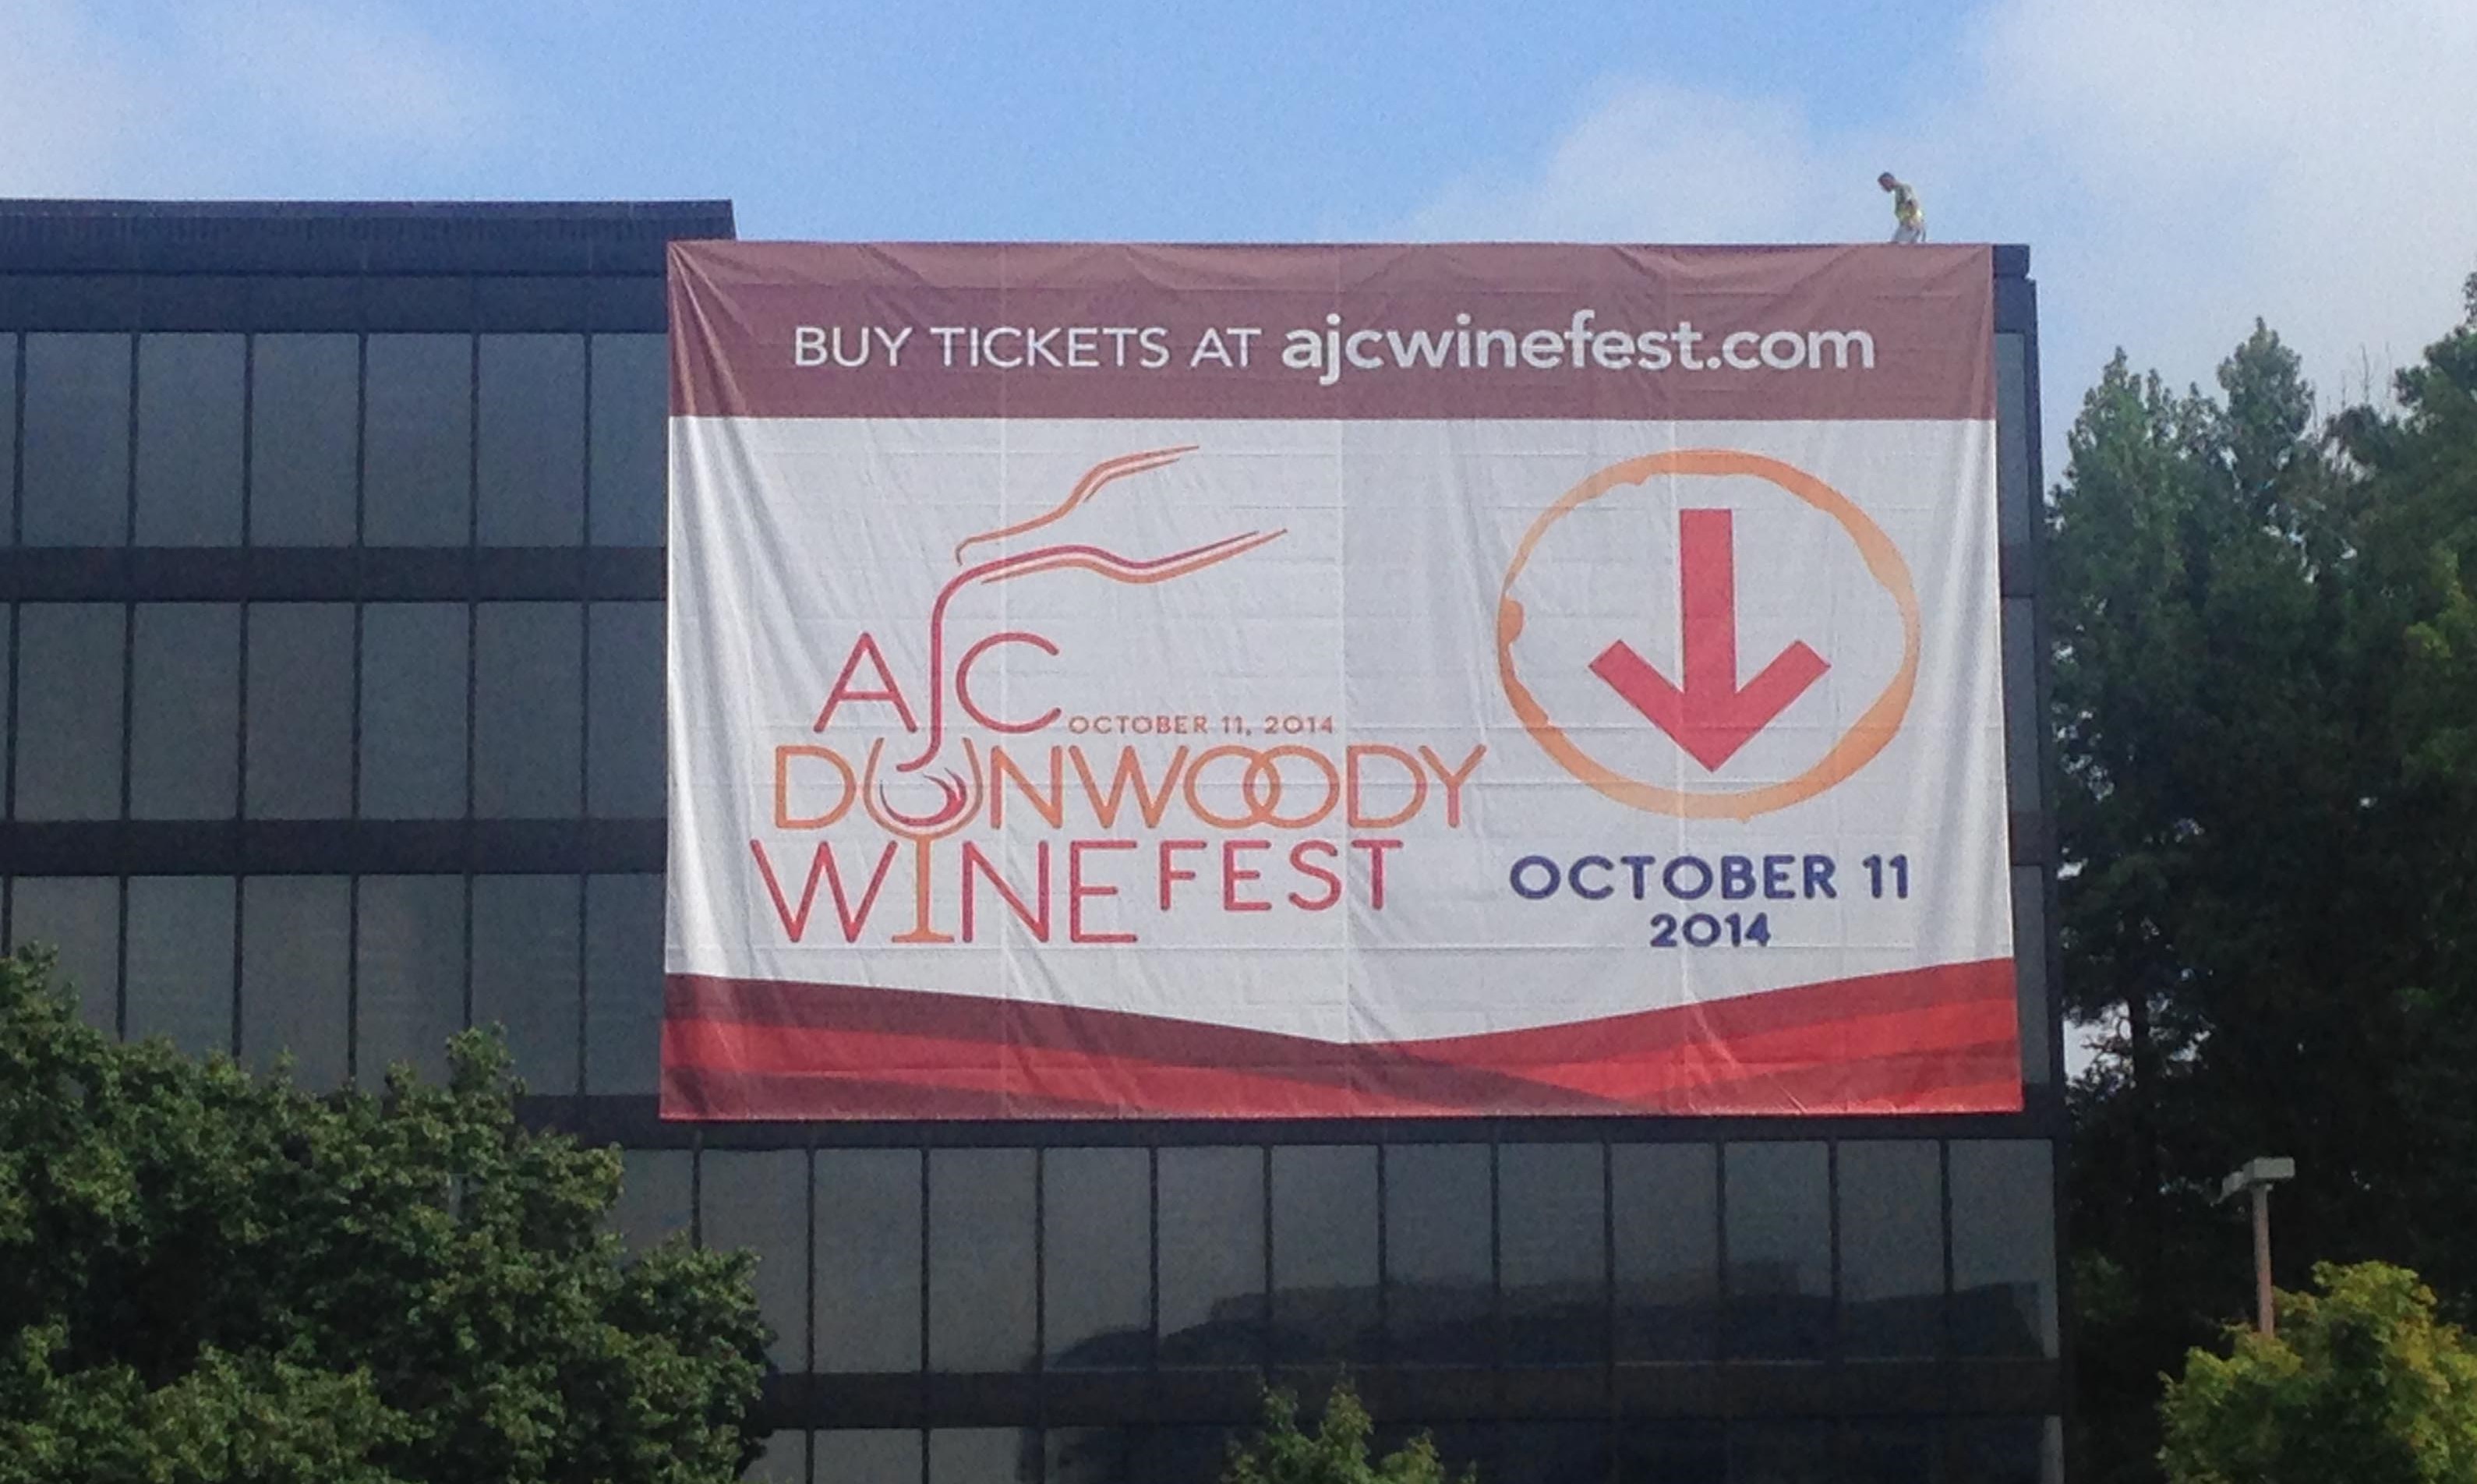 large banner for AJC Dunwoody Winefest